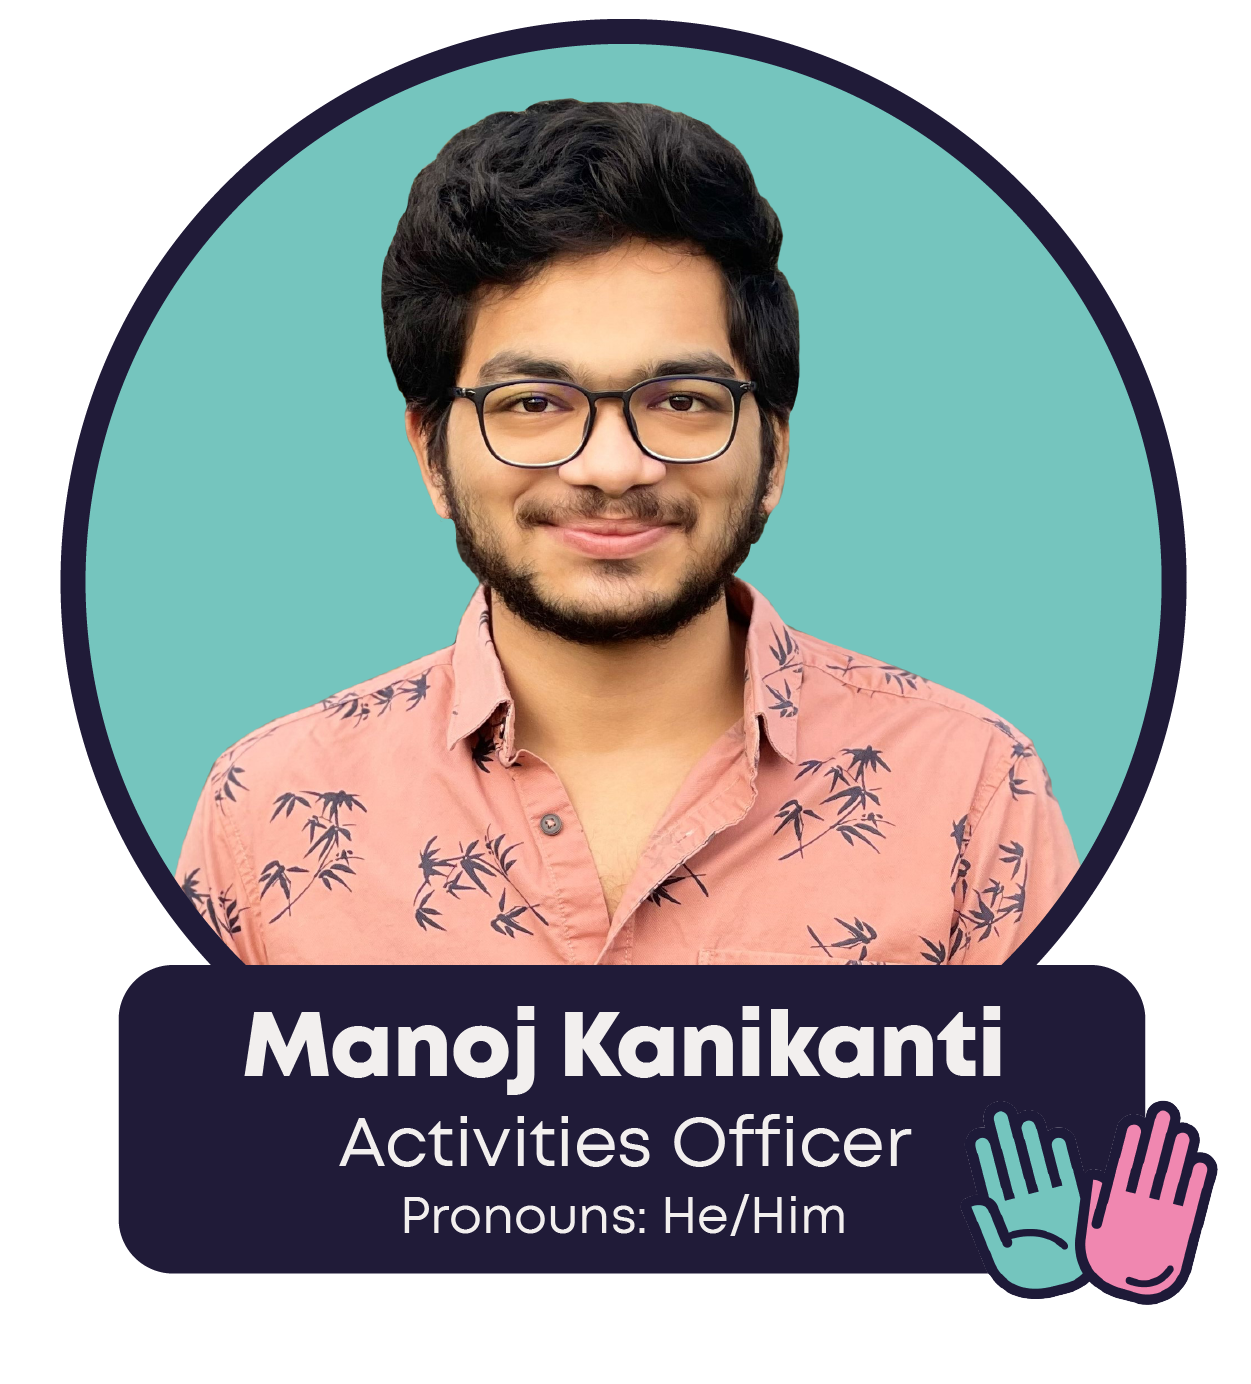 Manoj Kanikanti - Activities Officer - Pronouns: She/Her 